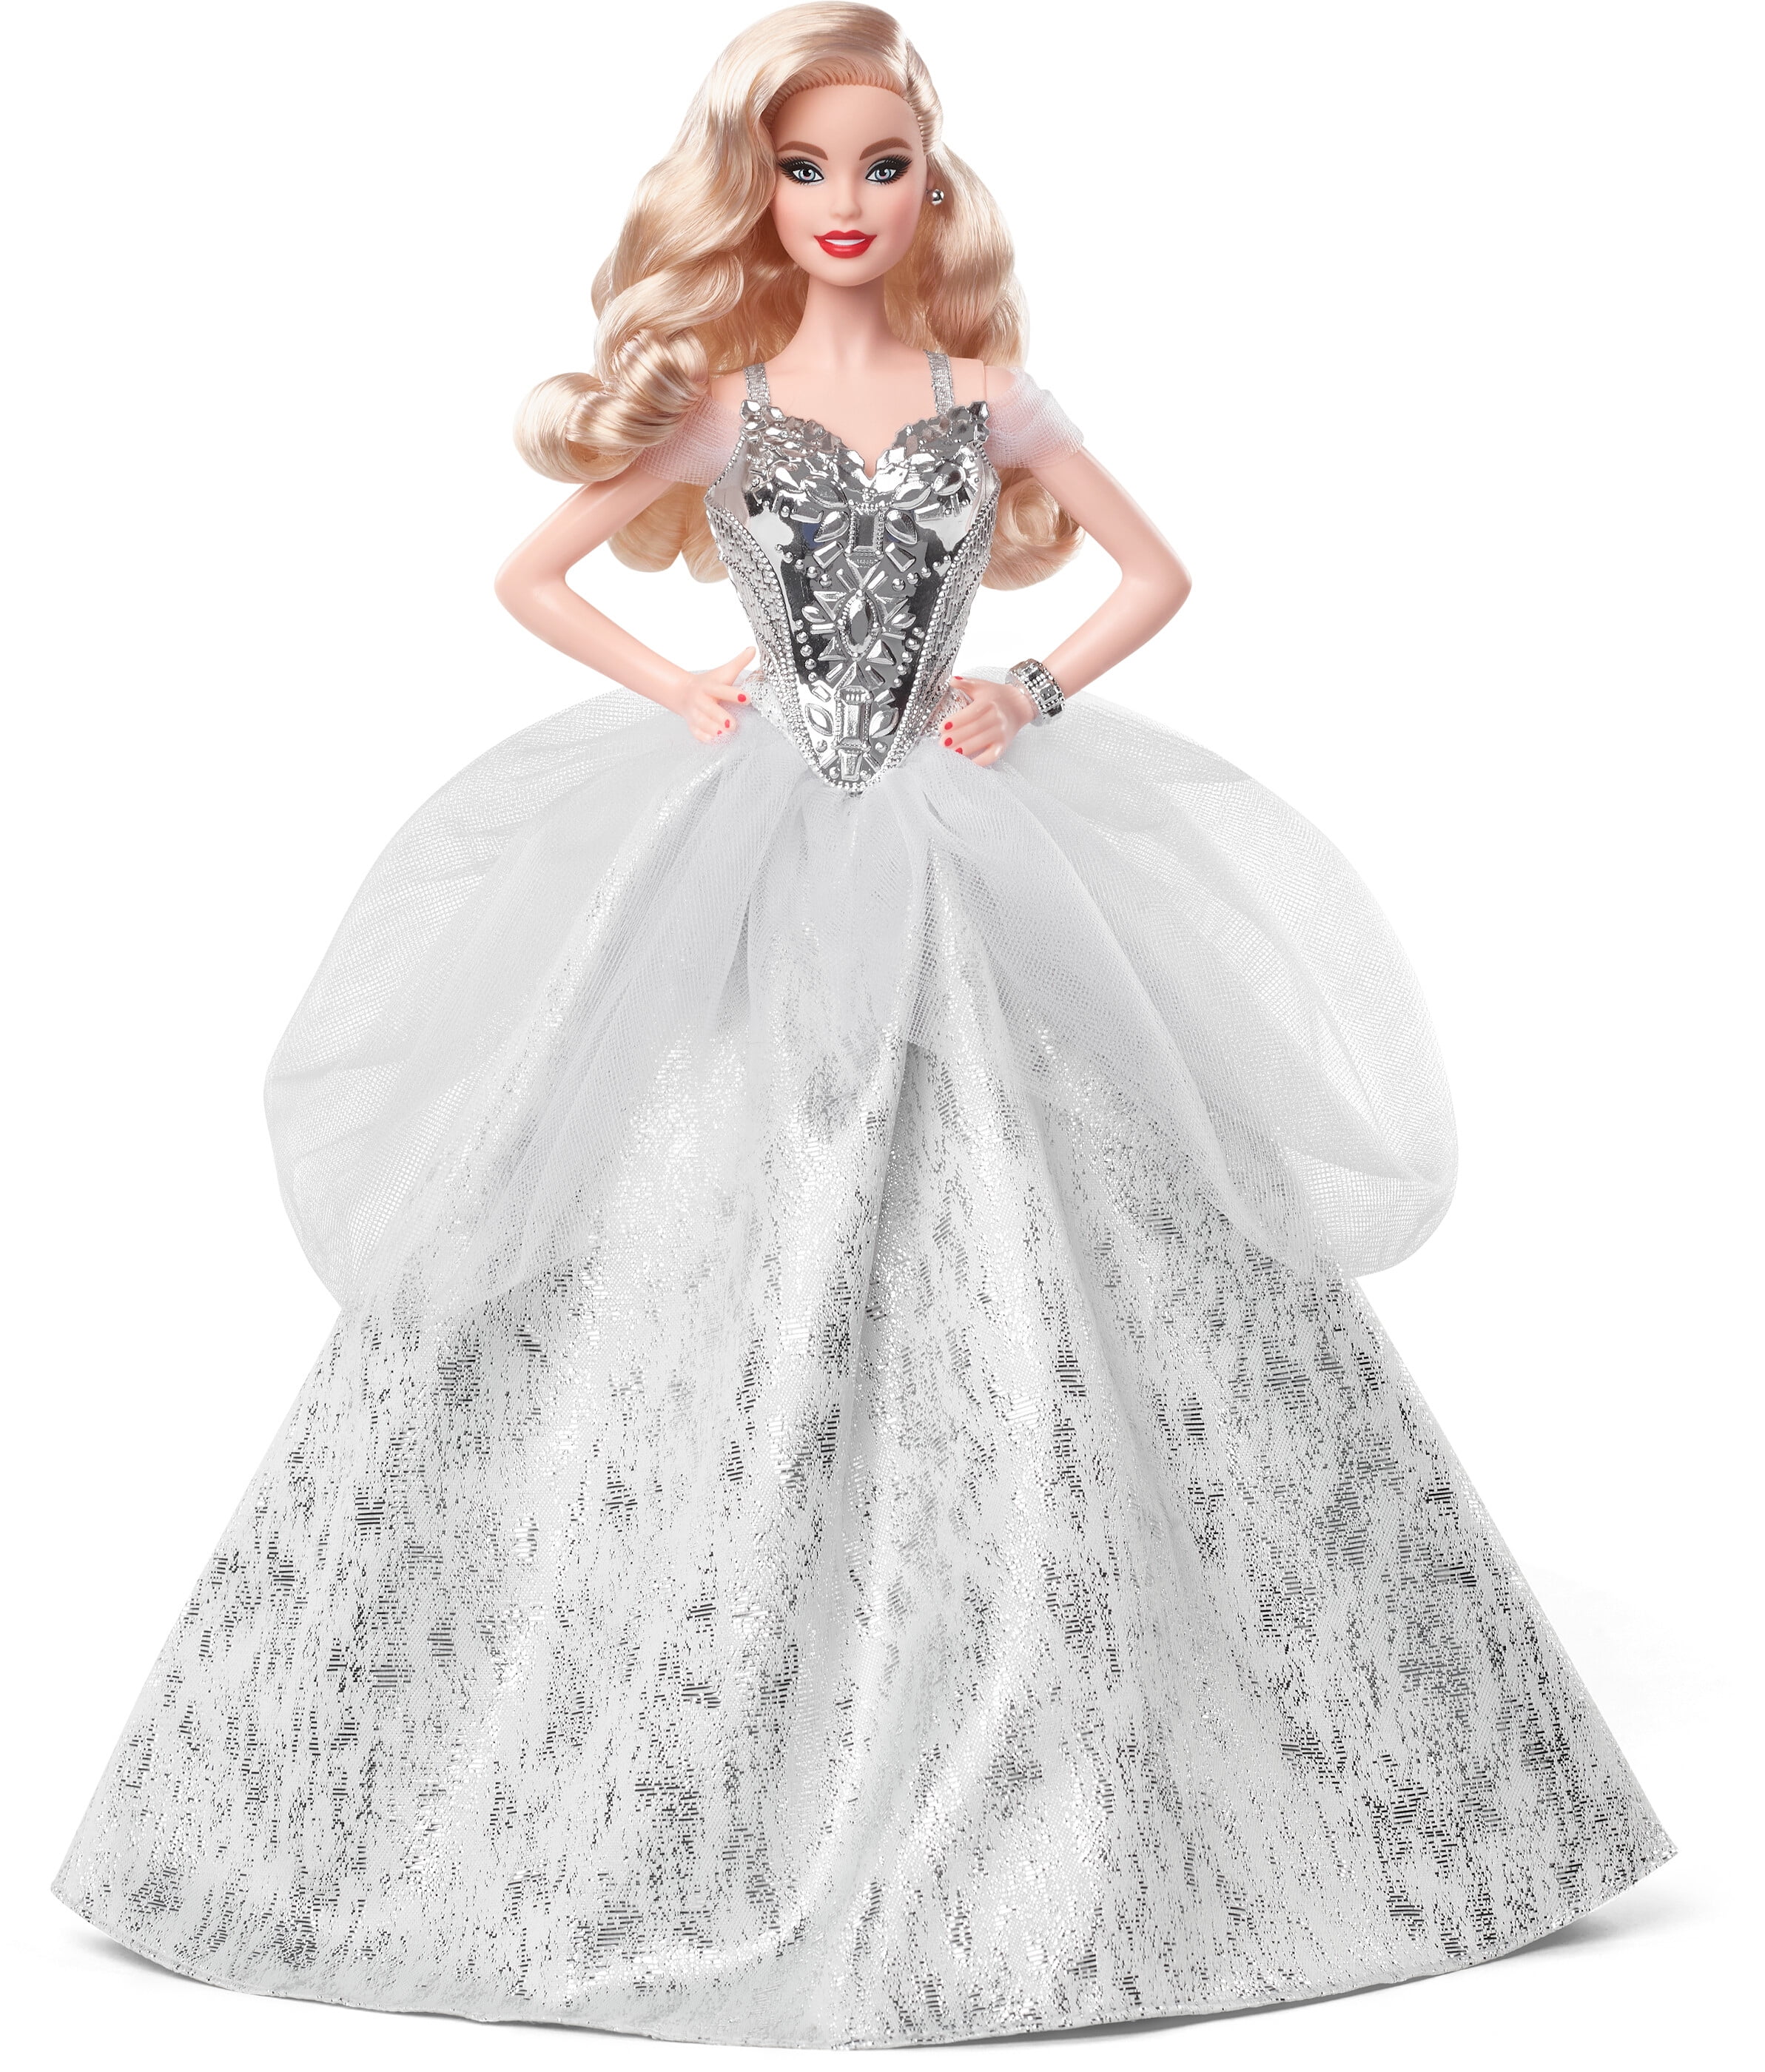 Barbie Dress design 28086716 Stock Photo at Vecteezy